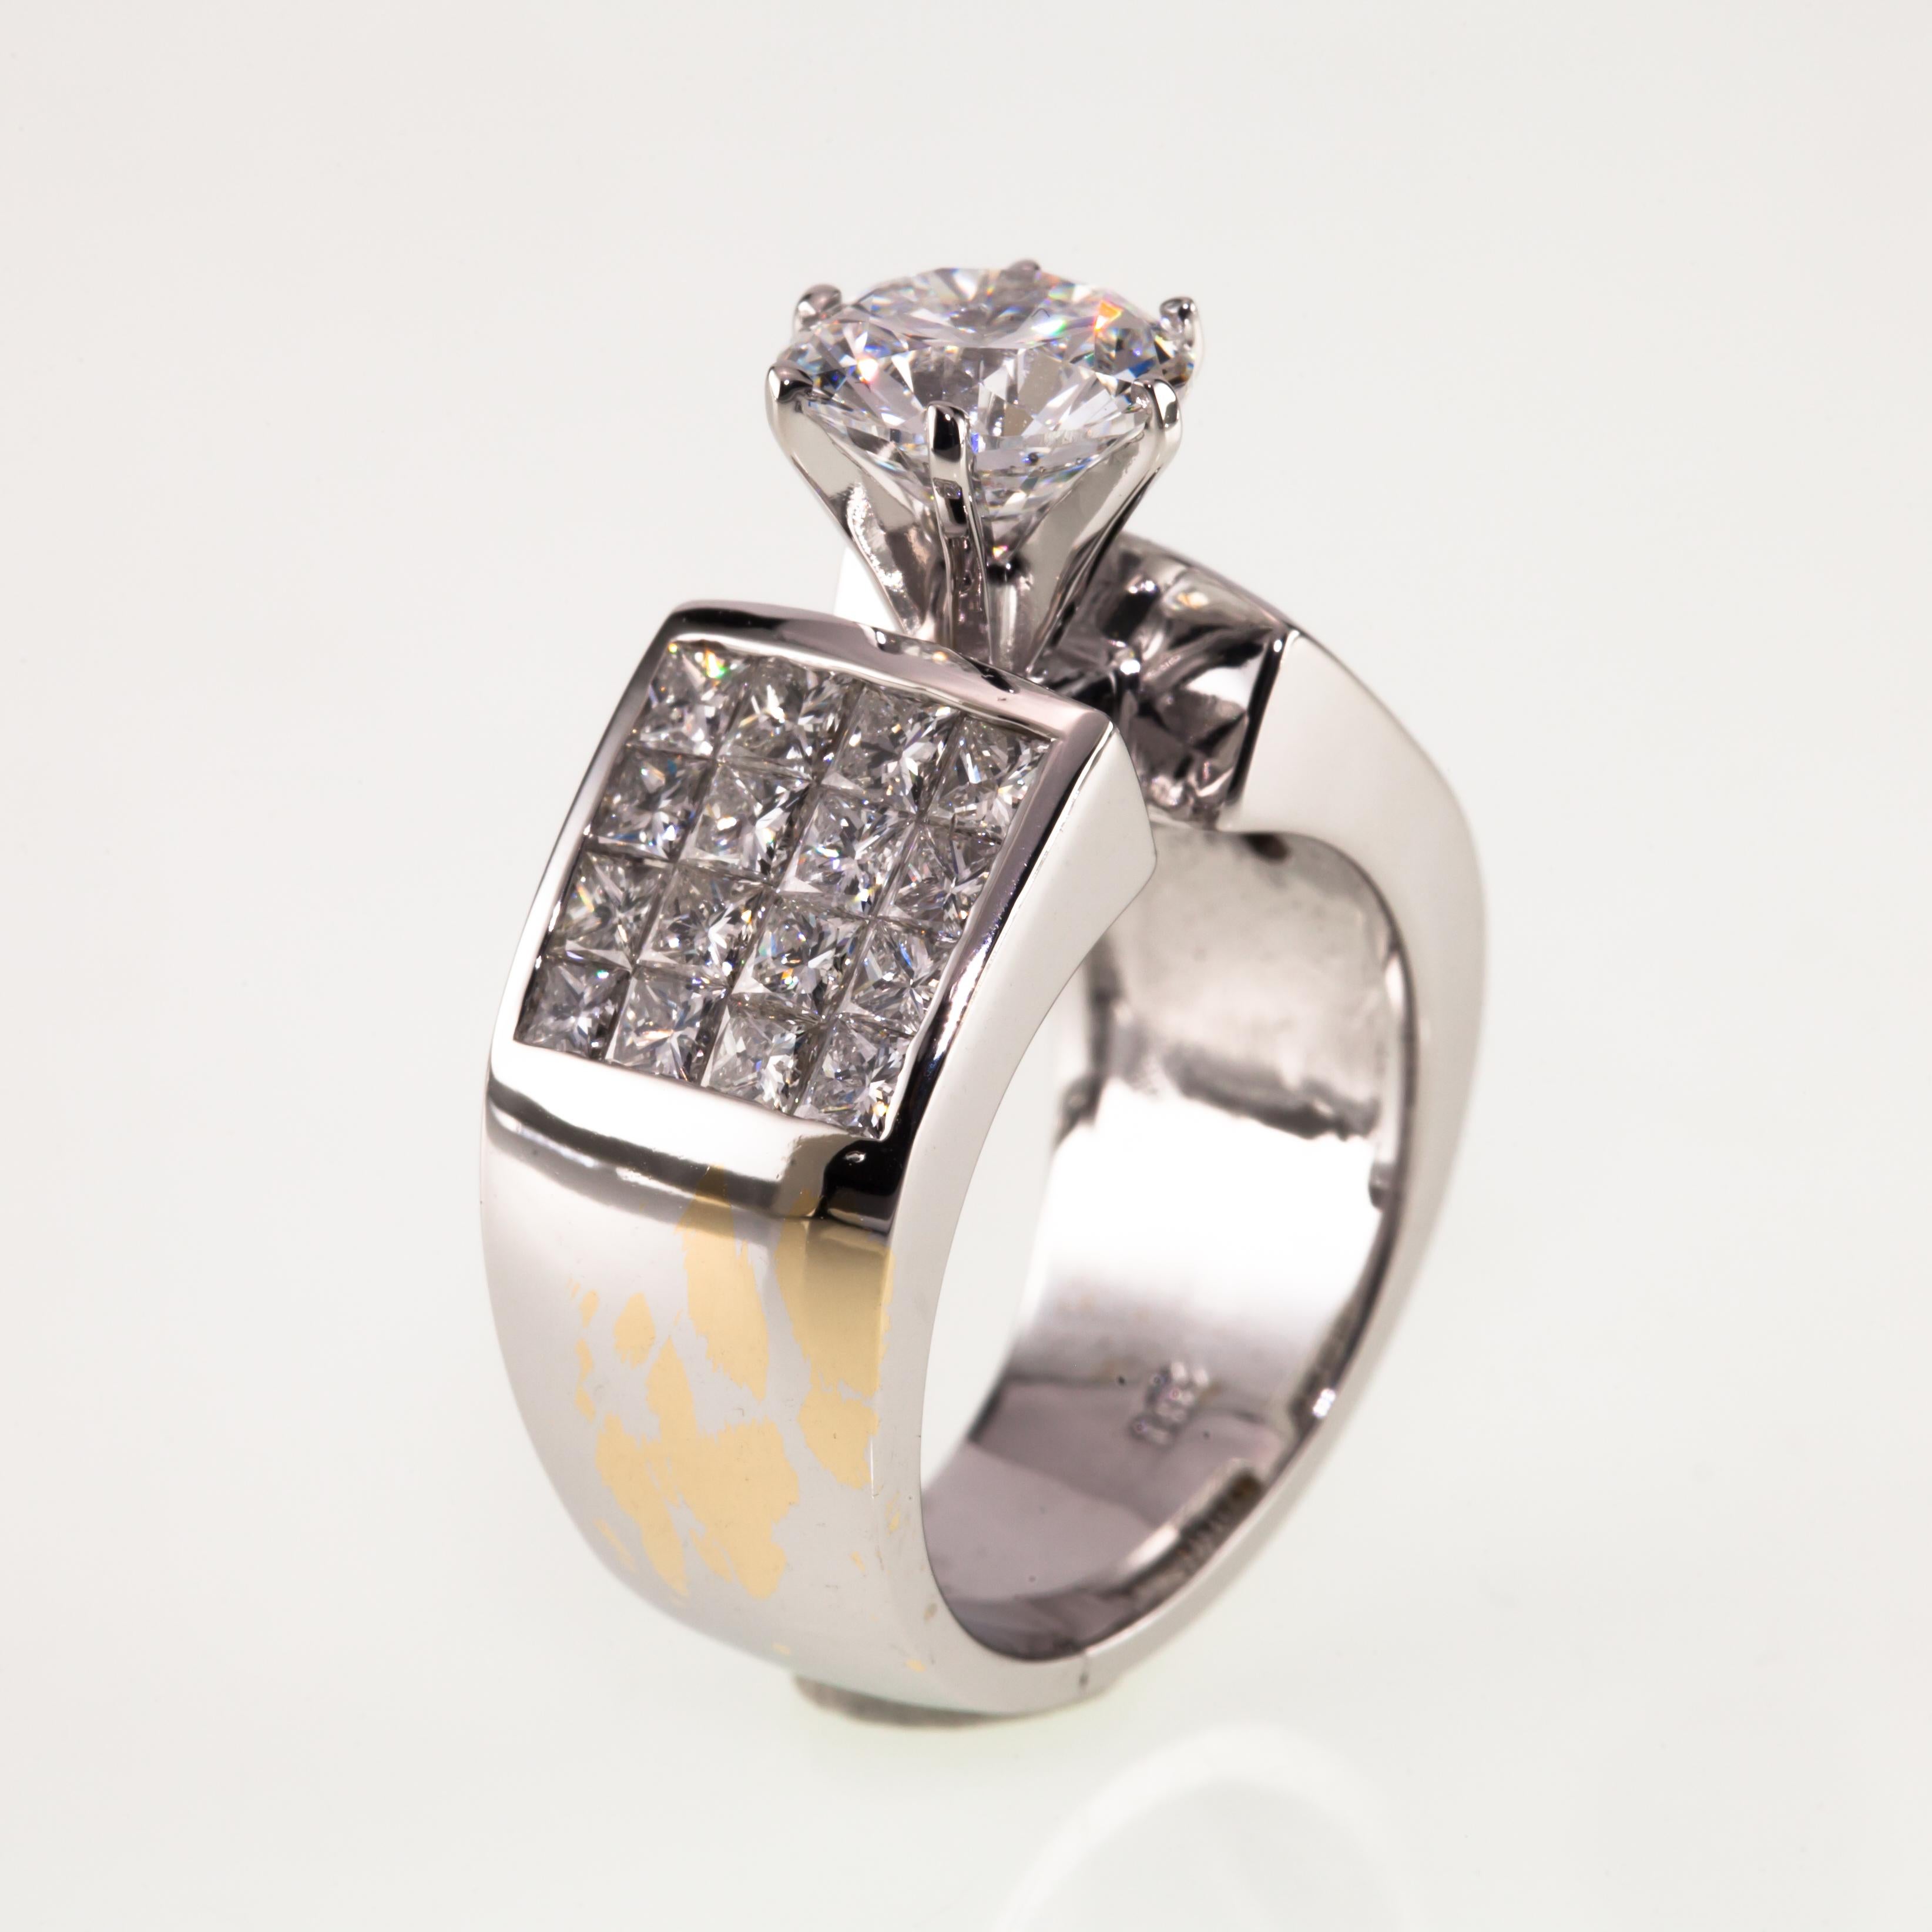 Round Cut 1.71 Carat D Color Round Diamond Solitaire Ring Princess Accents For Sale